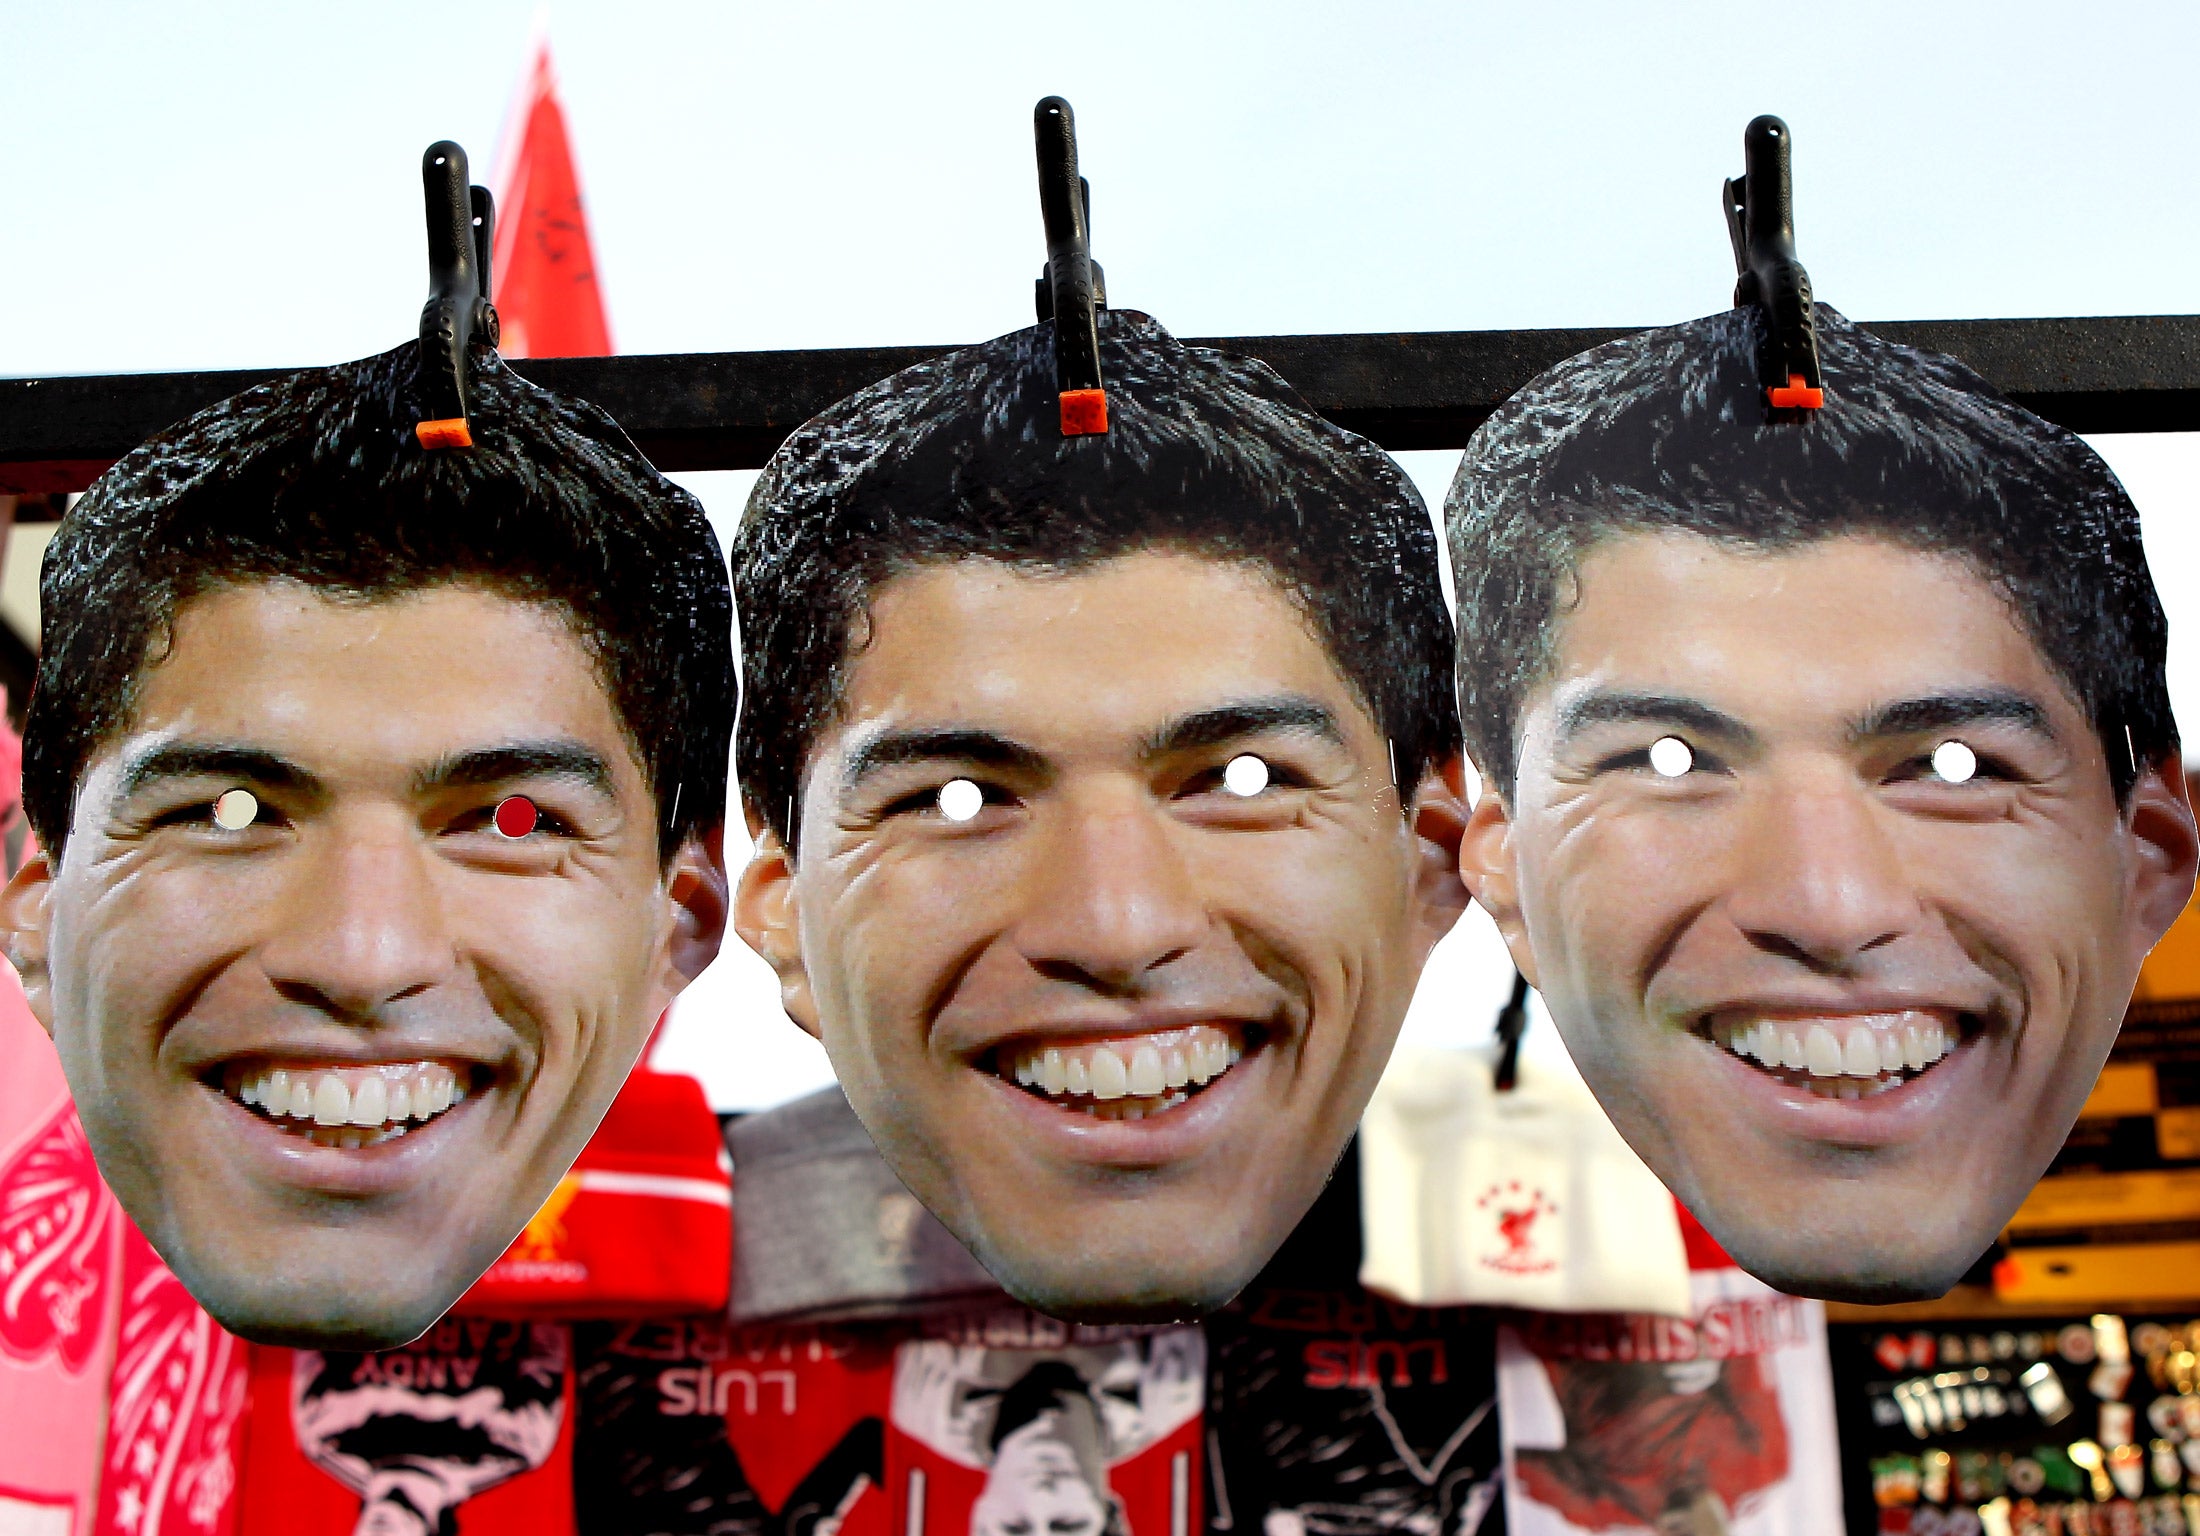 Luis Suarez masks on sale outside Anfield